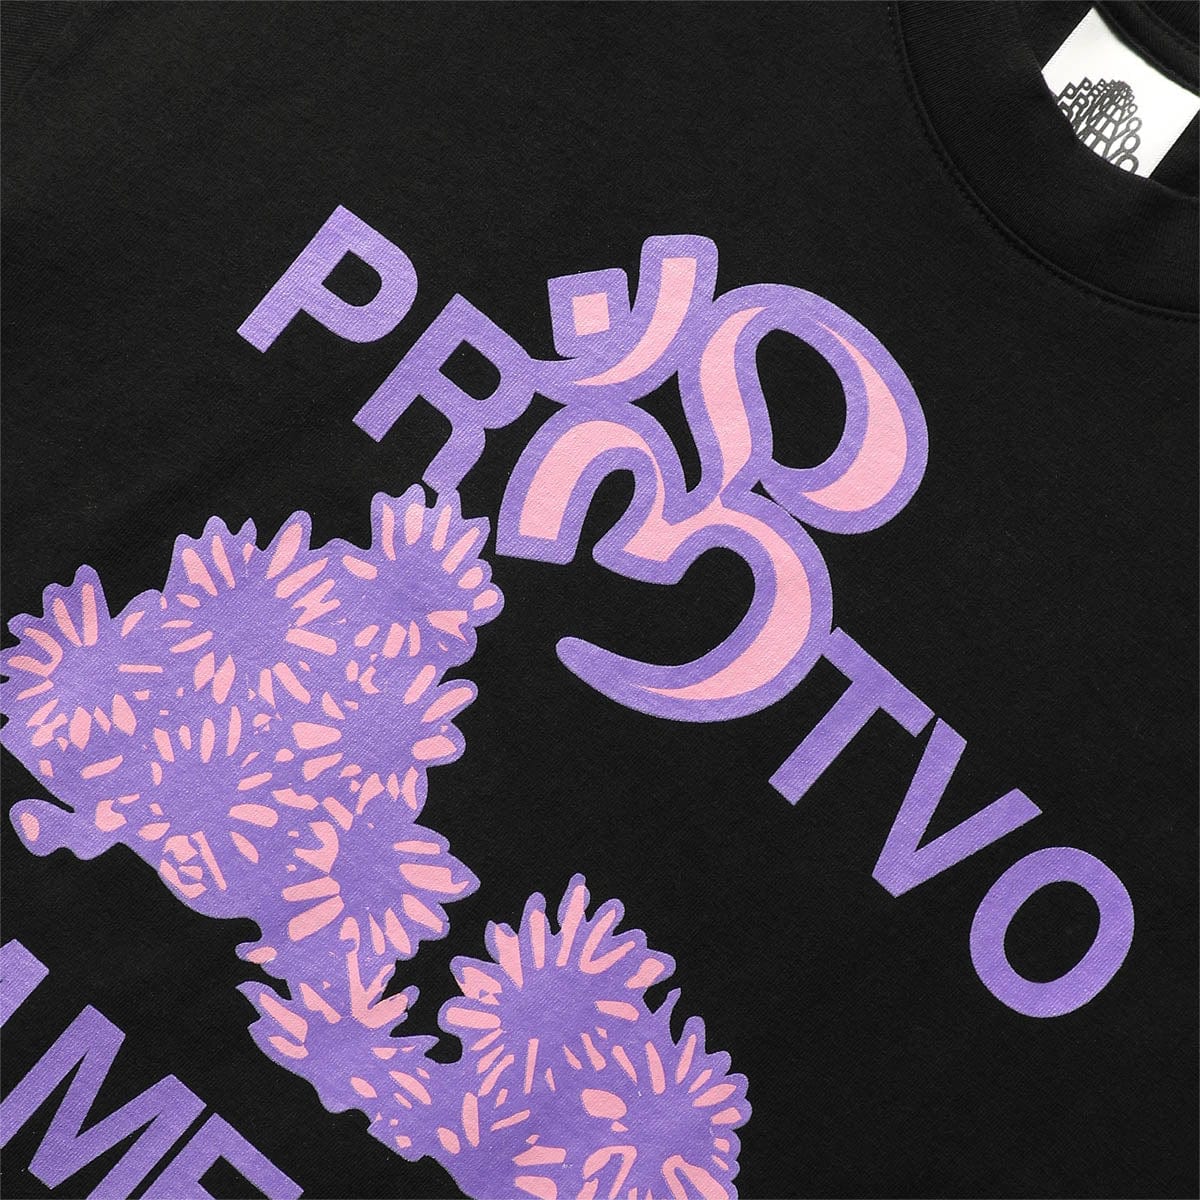 PRMTVO T-Shirts OM MEGGA FLOWERS T-SHIRT